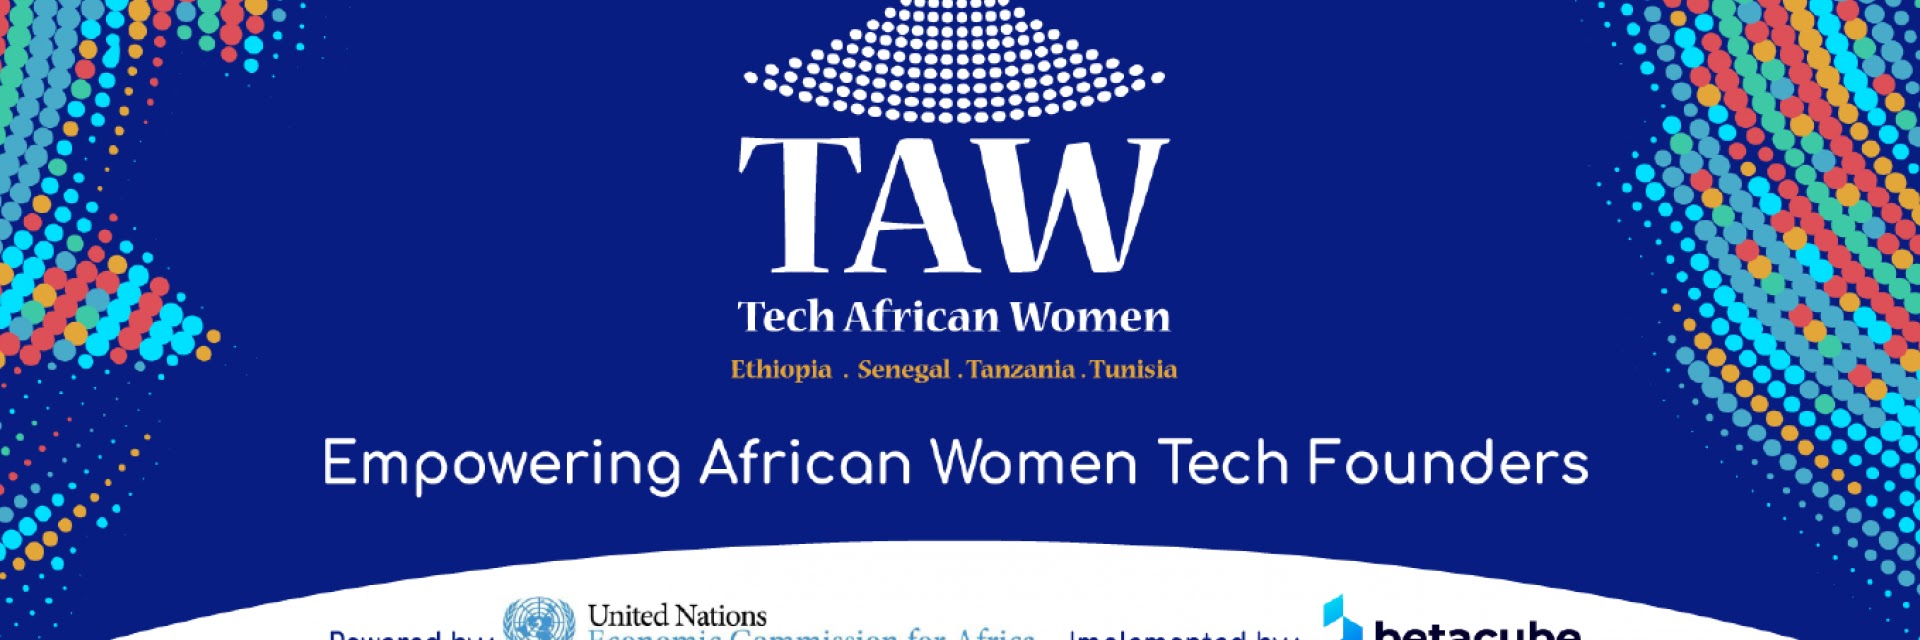 United Nations ECA Tech African Women Program